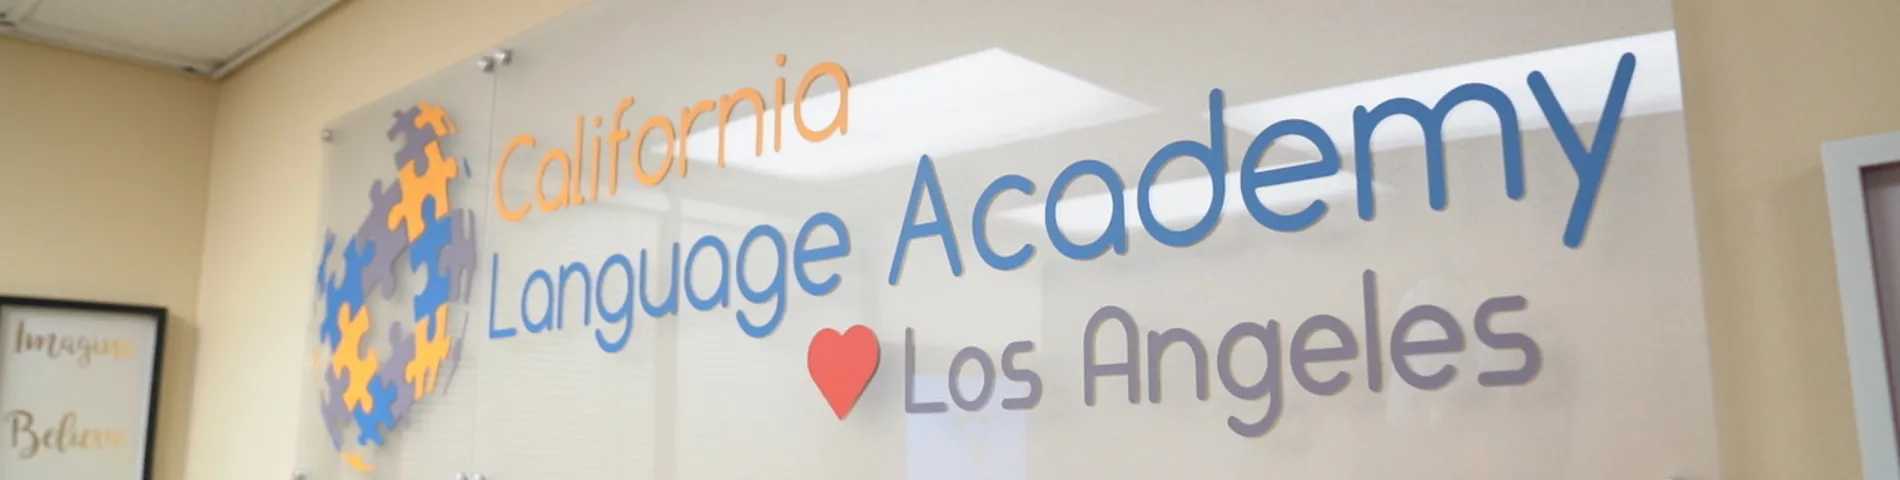 California Language Academy画像1